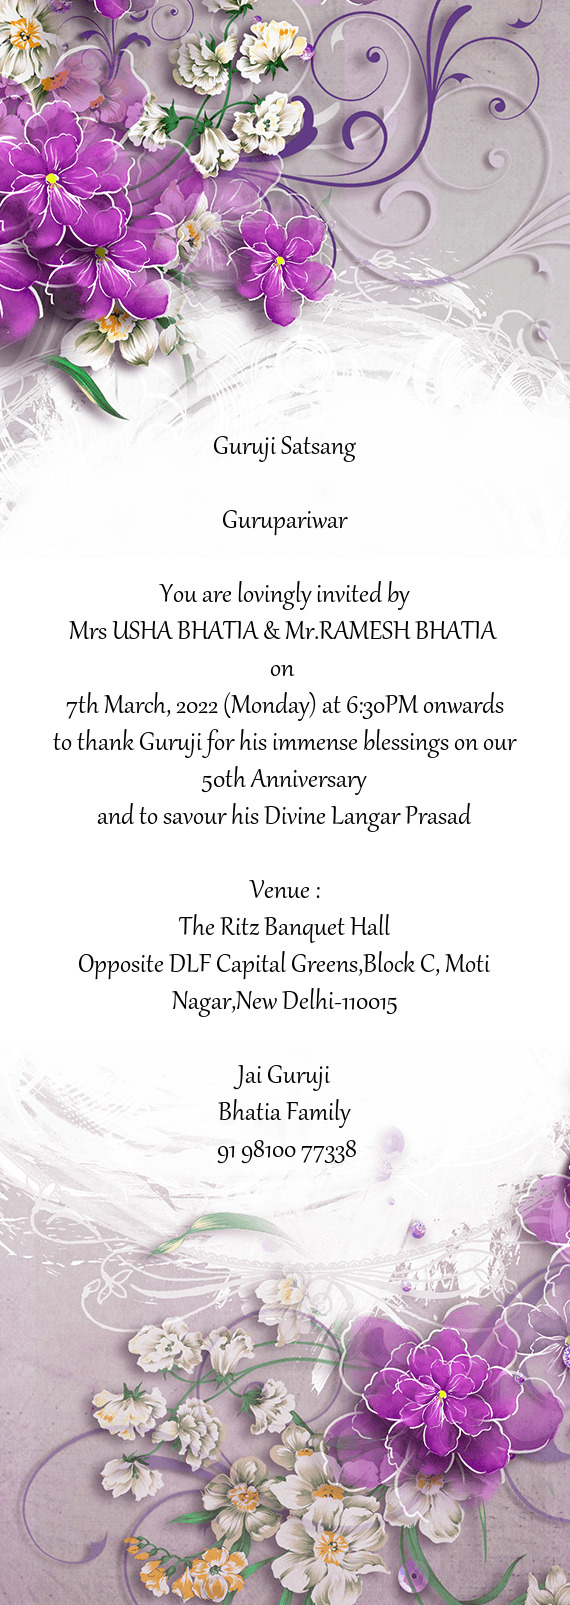 Mrs USHA BHATIA & Mr.RAMESH BHATIA